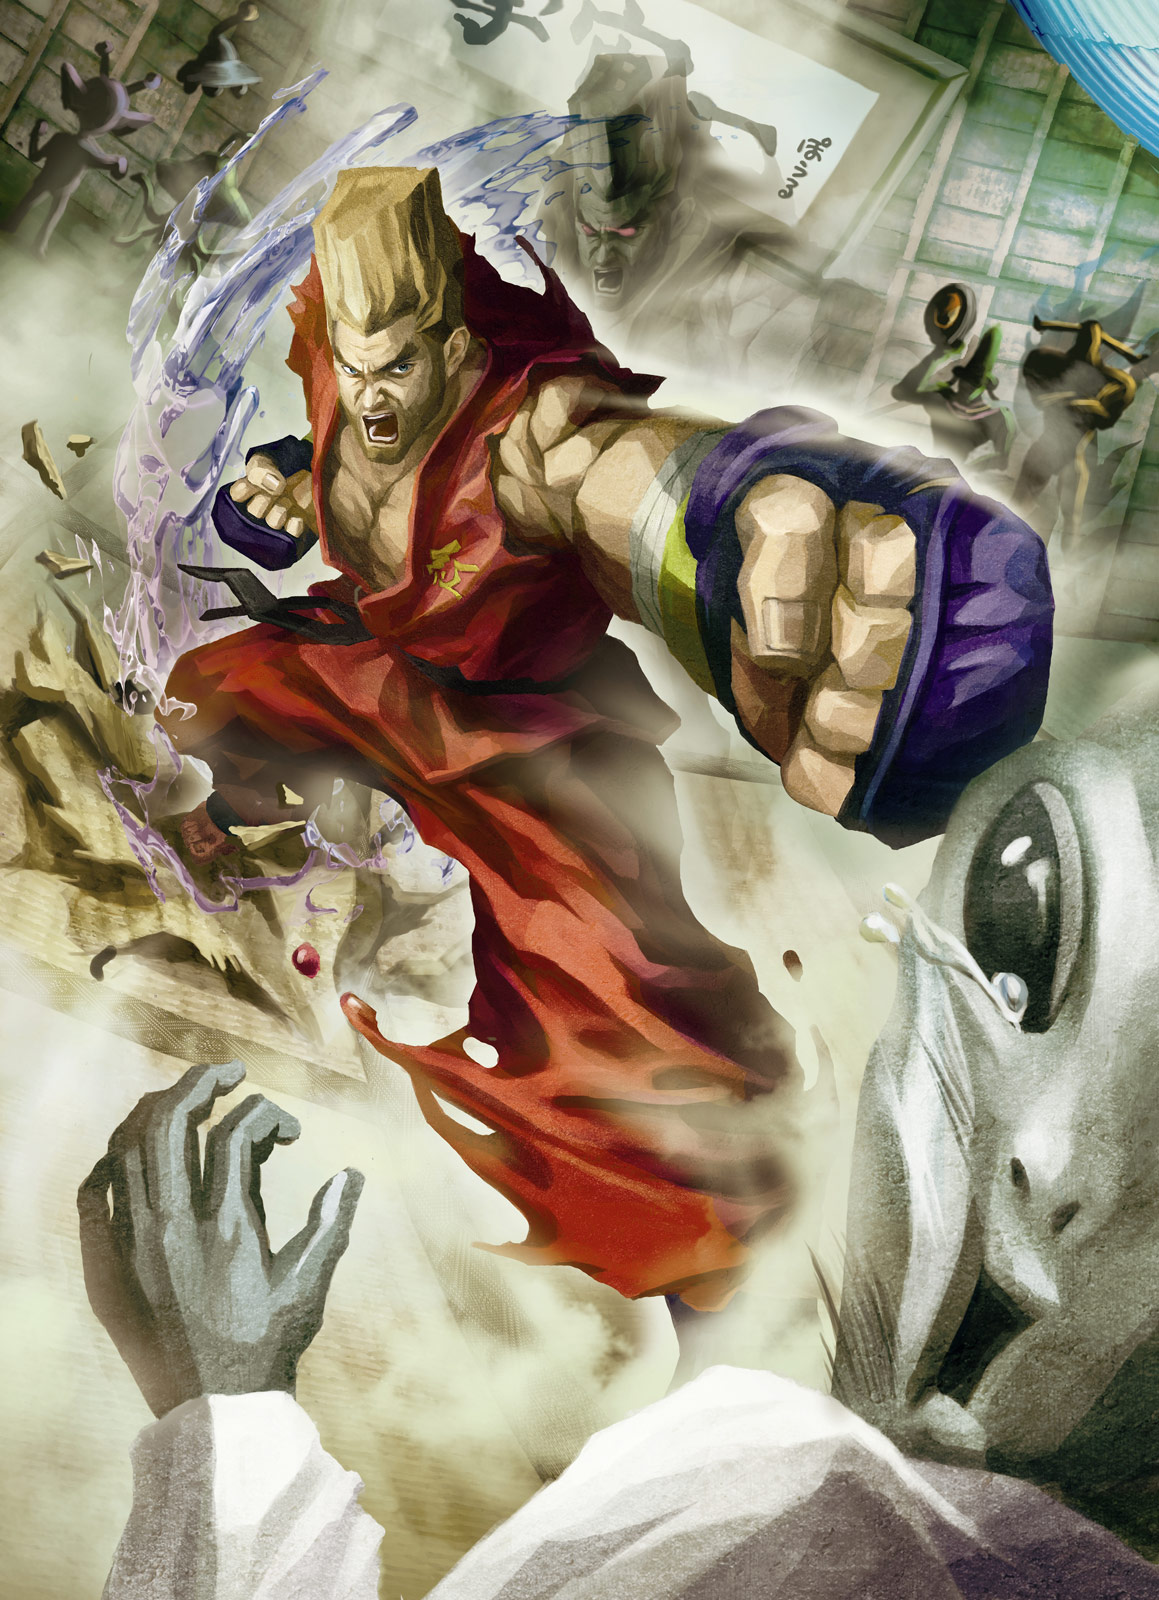 Street Fighter X Tekken, Tekken Wiki